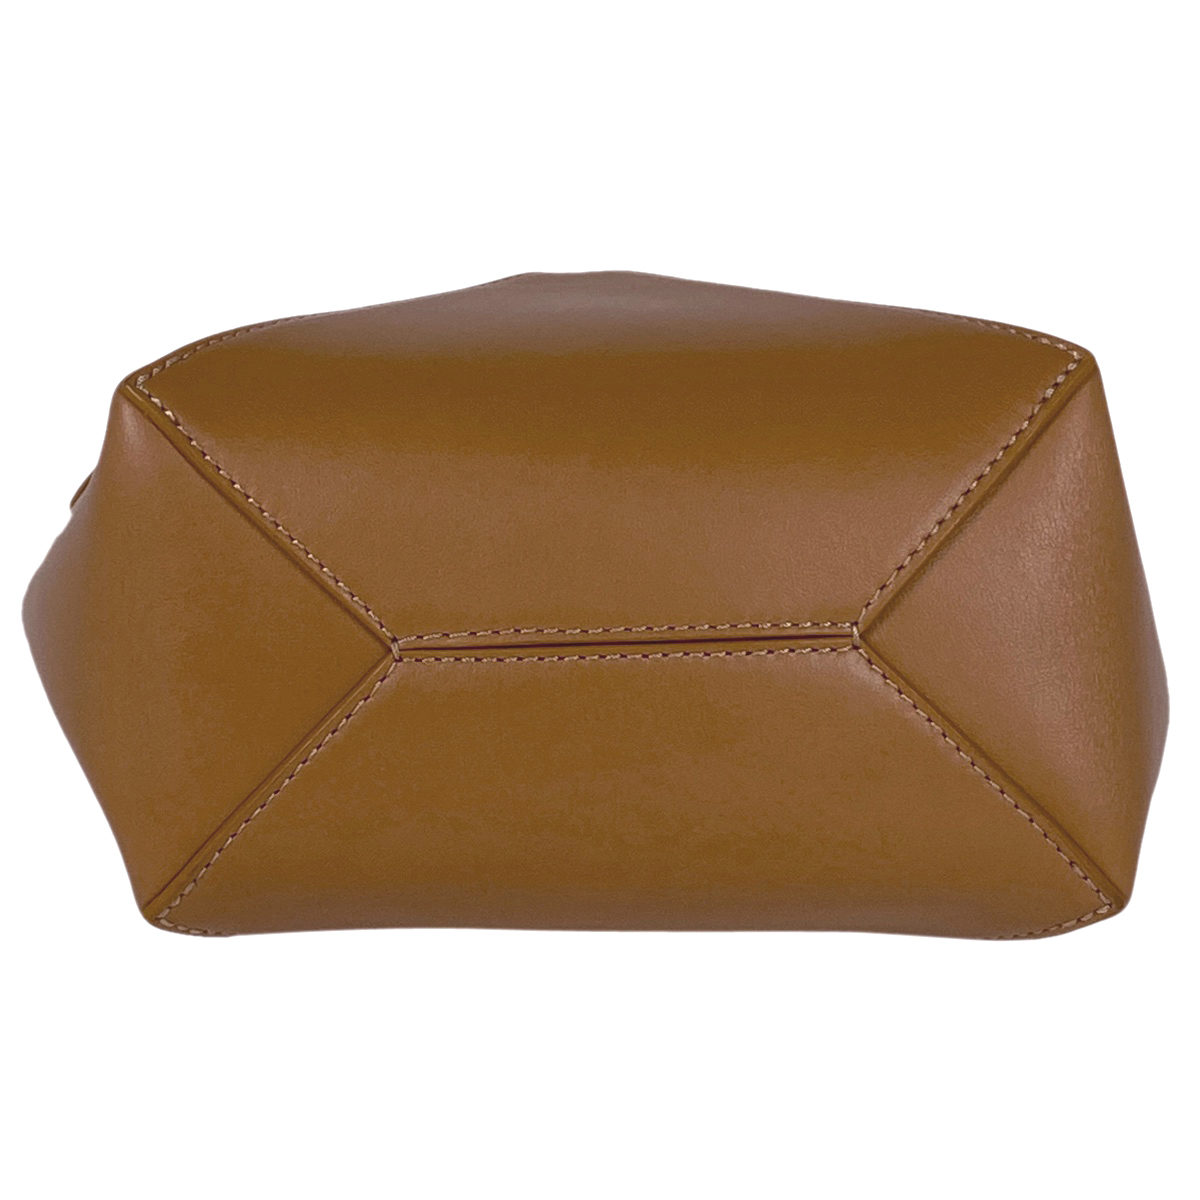  Loewe LOEWE мозаика forudo большая сумка Mini 2WAY сумка на плечо ручная сумочка большая сумка кожа теплый десерт [ б/у ]